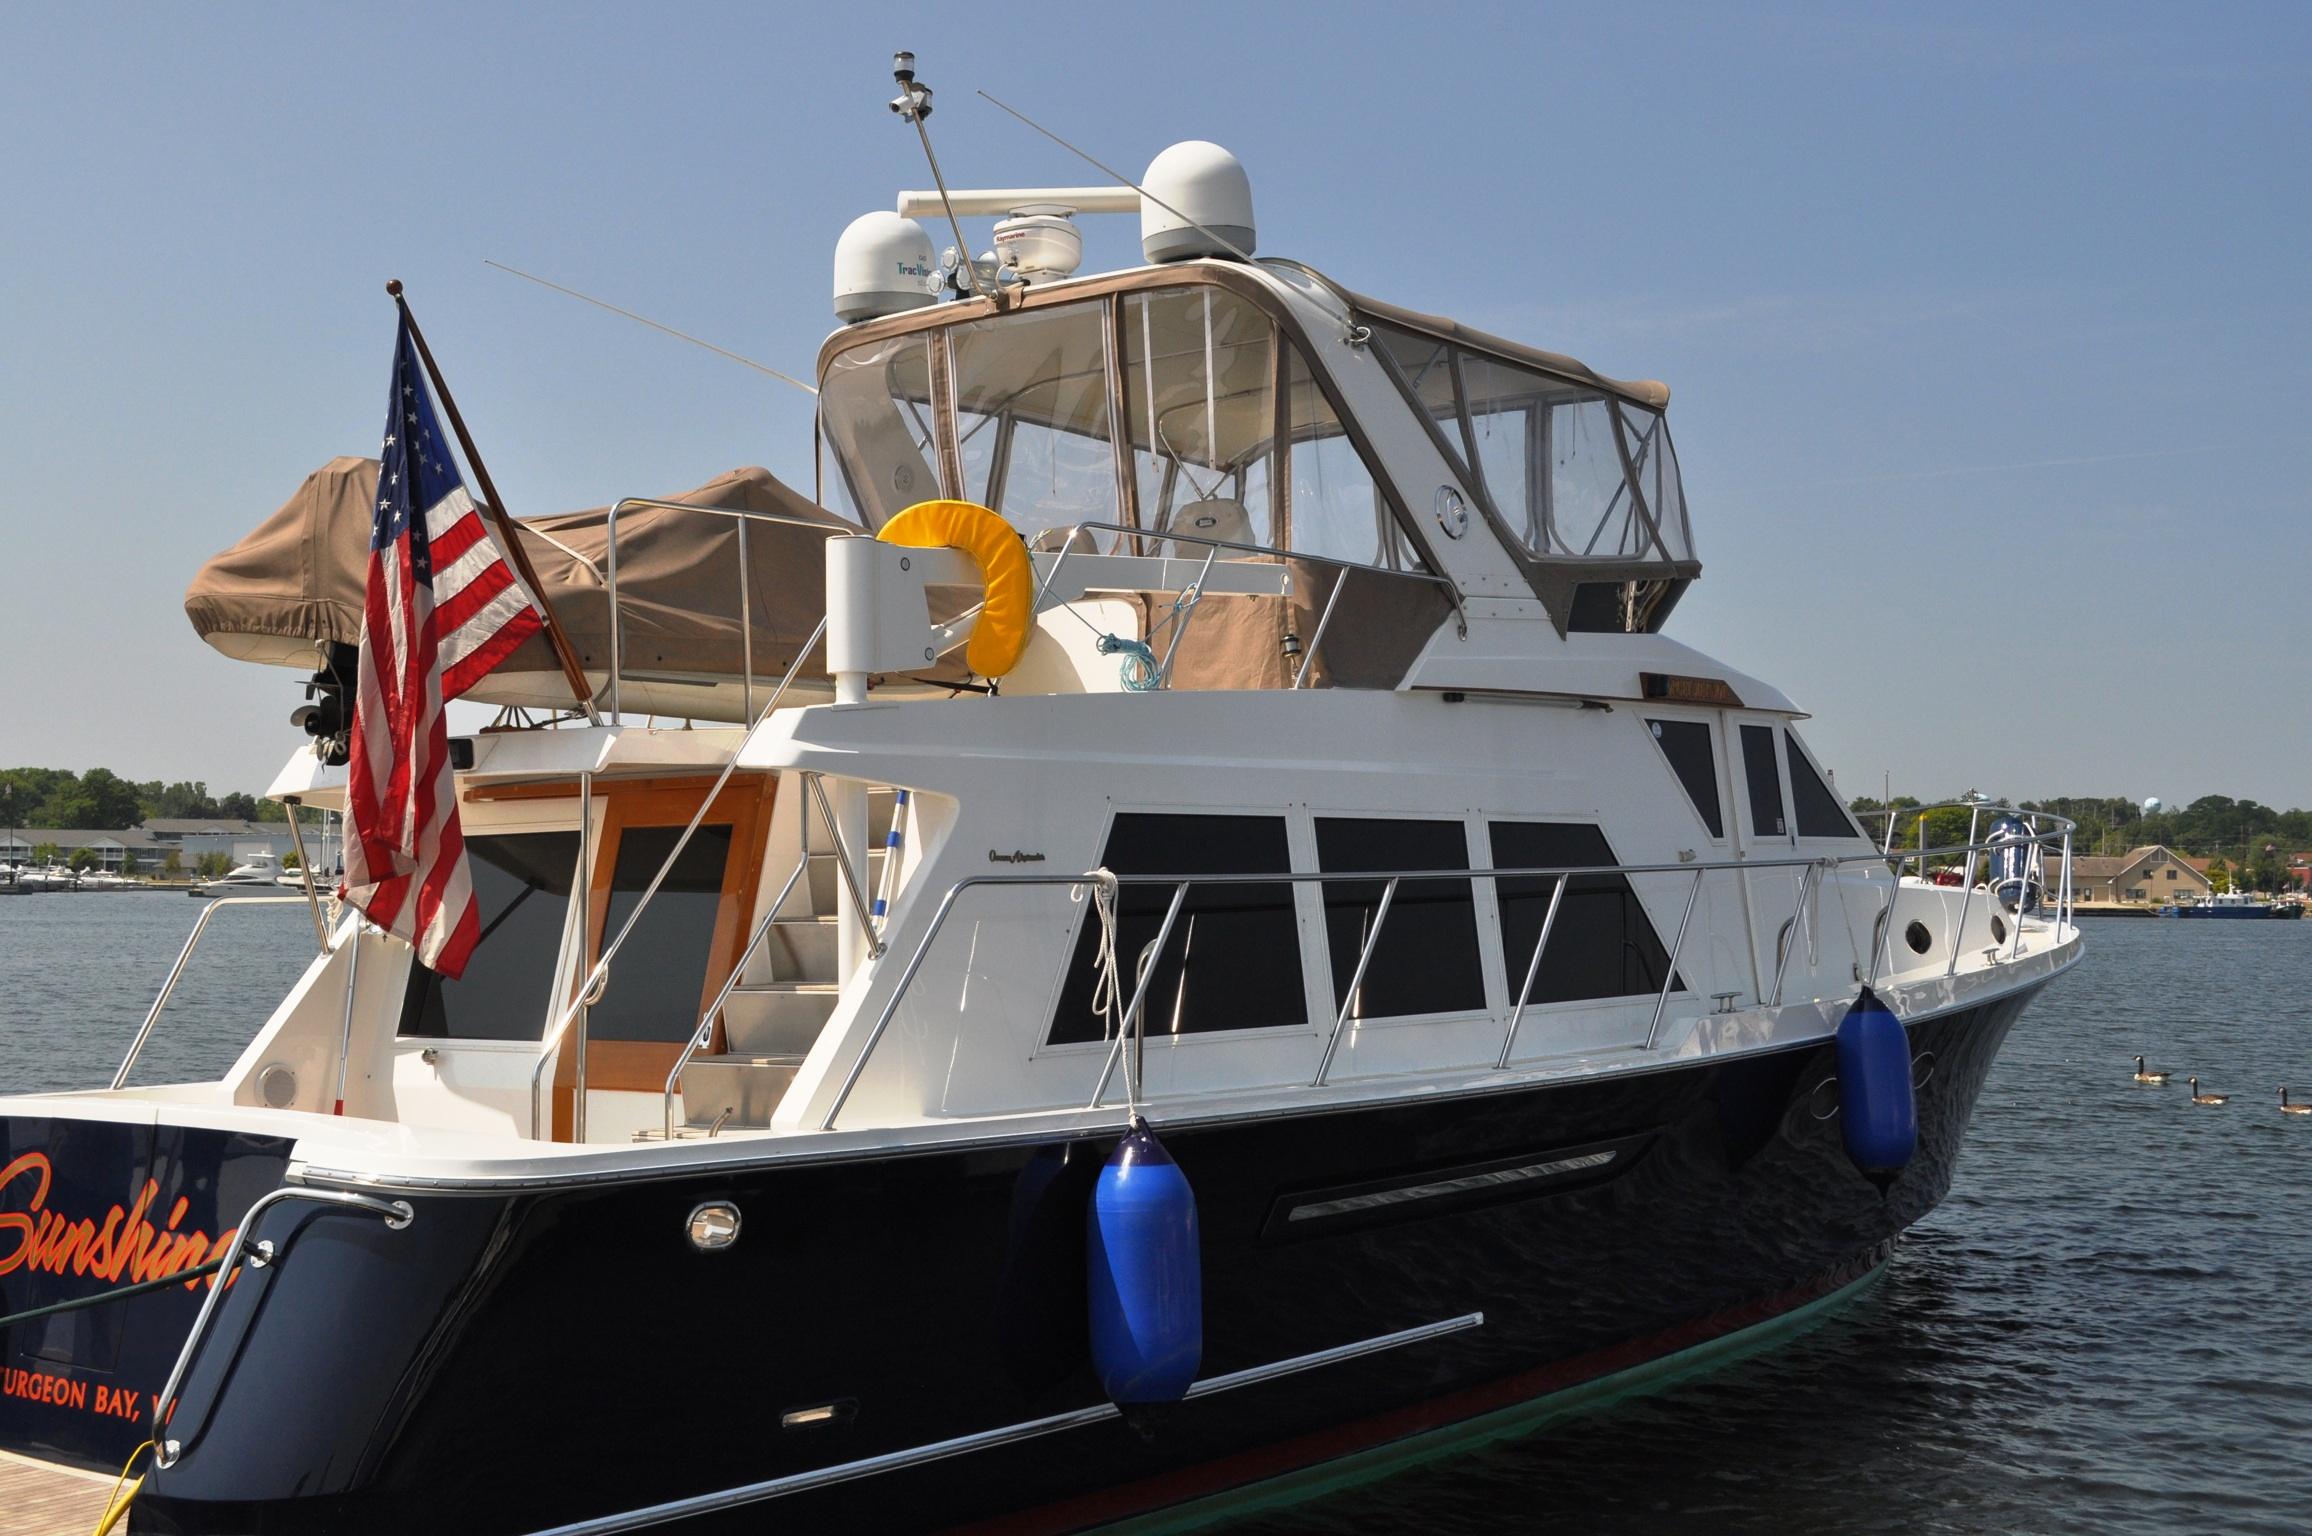 54 foot ocean yacht